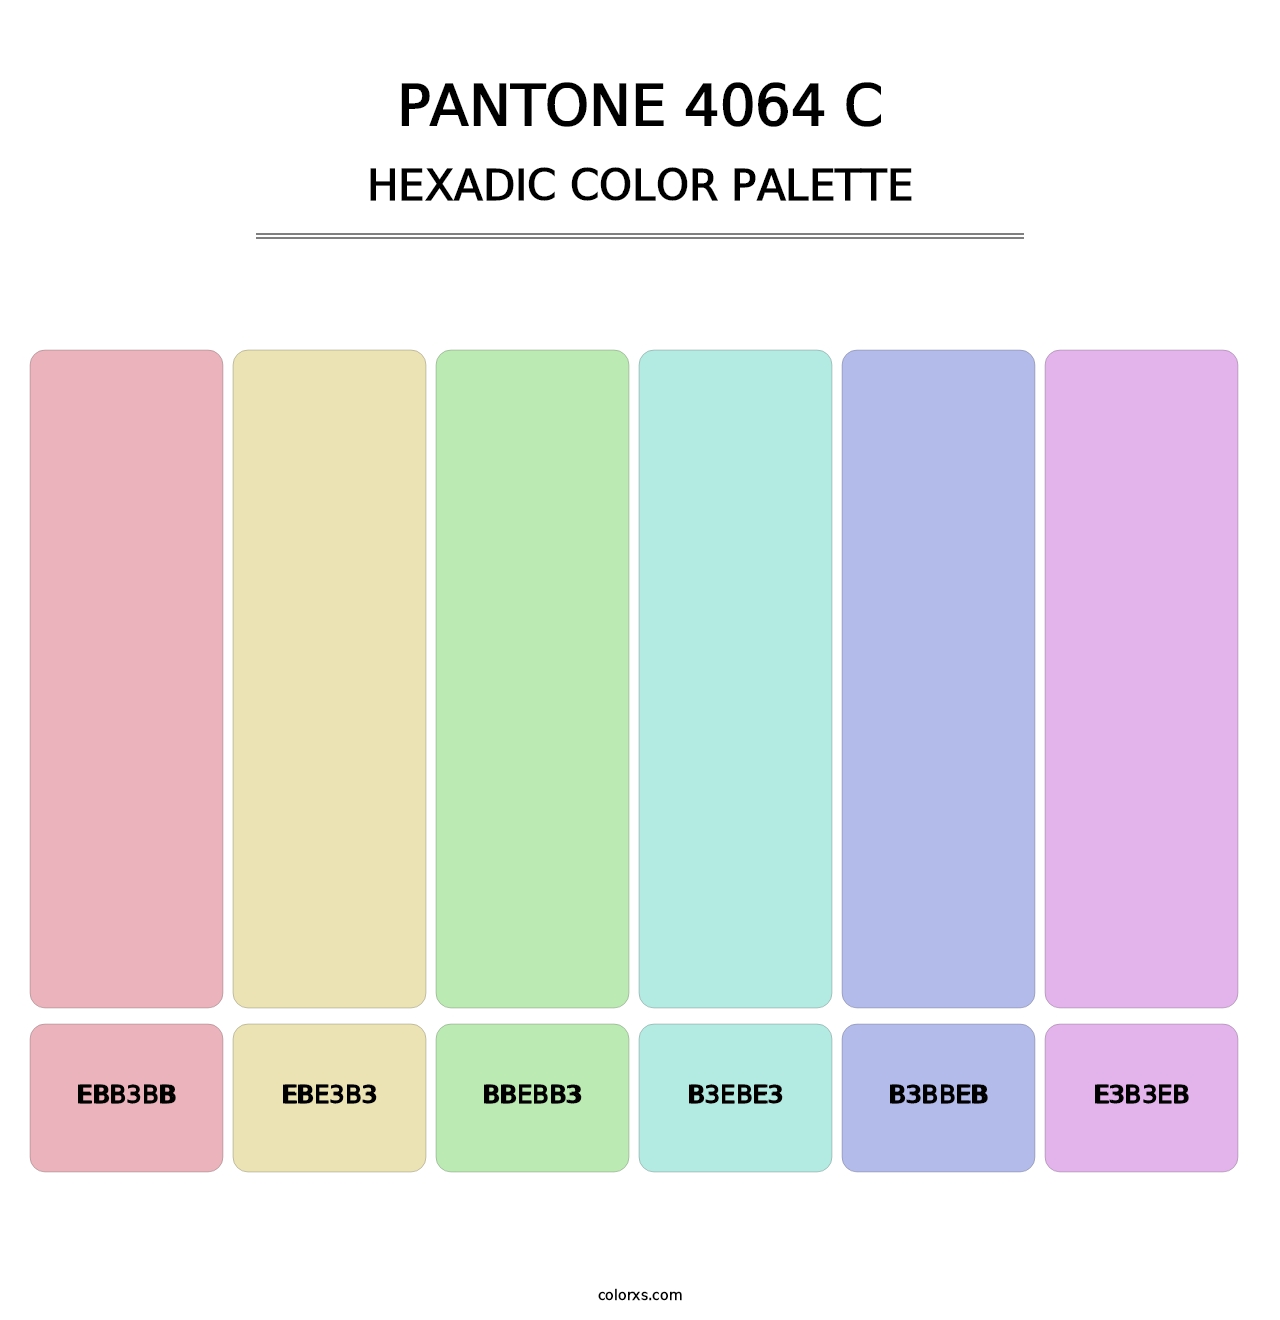 PANTONE 4064 C - Hexadic Color Palette